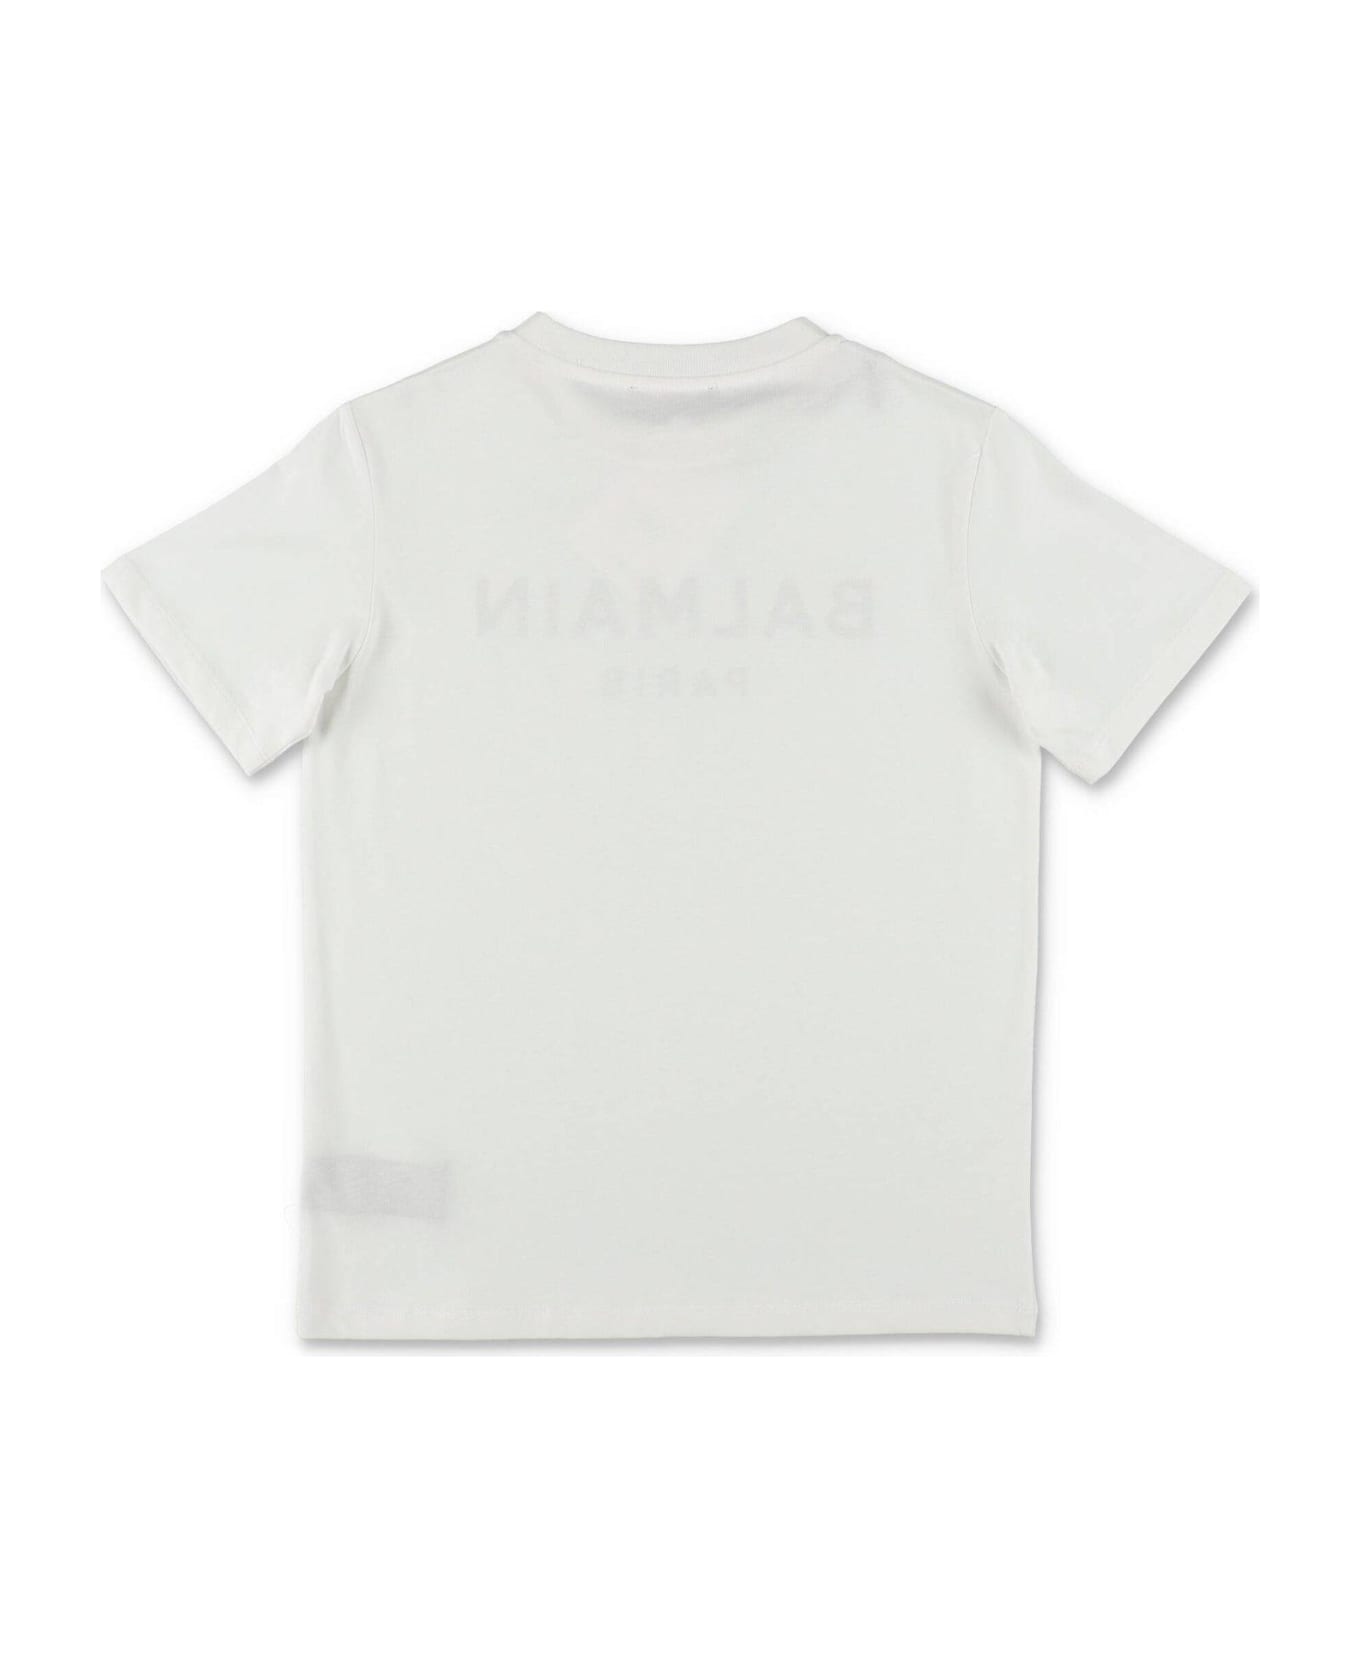 Balmain Logo Printed Crewneck T-shirt - White/black